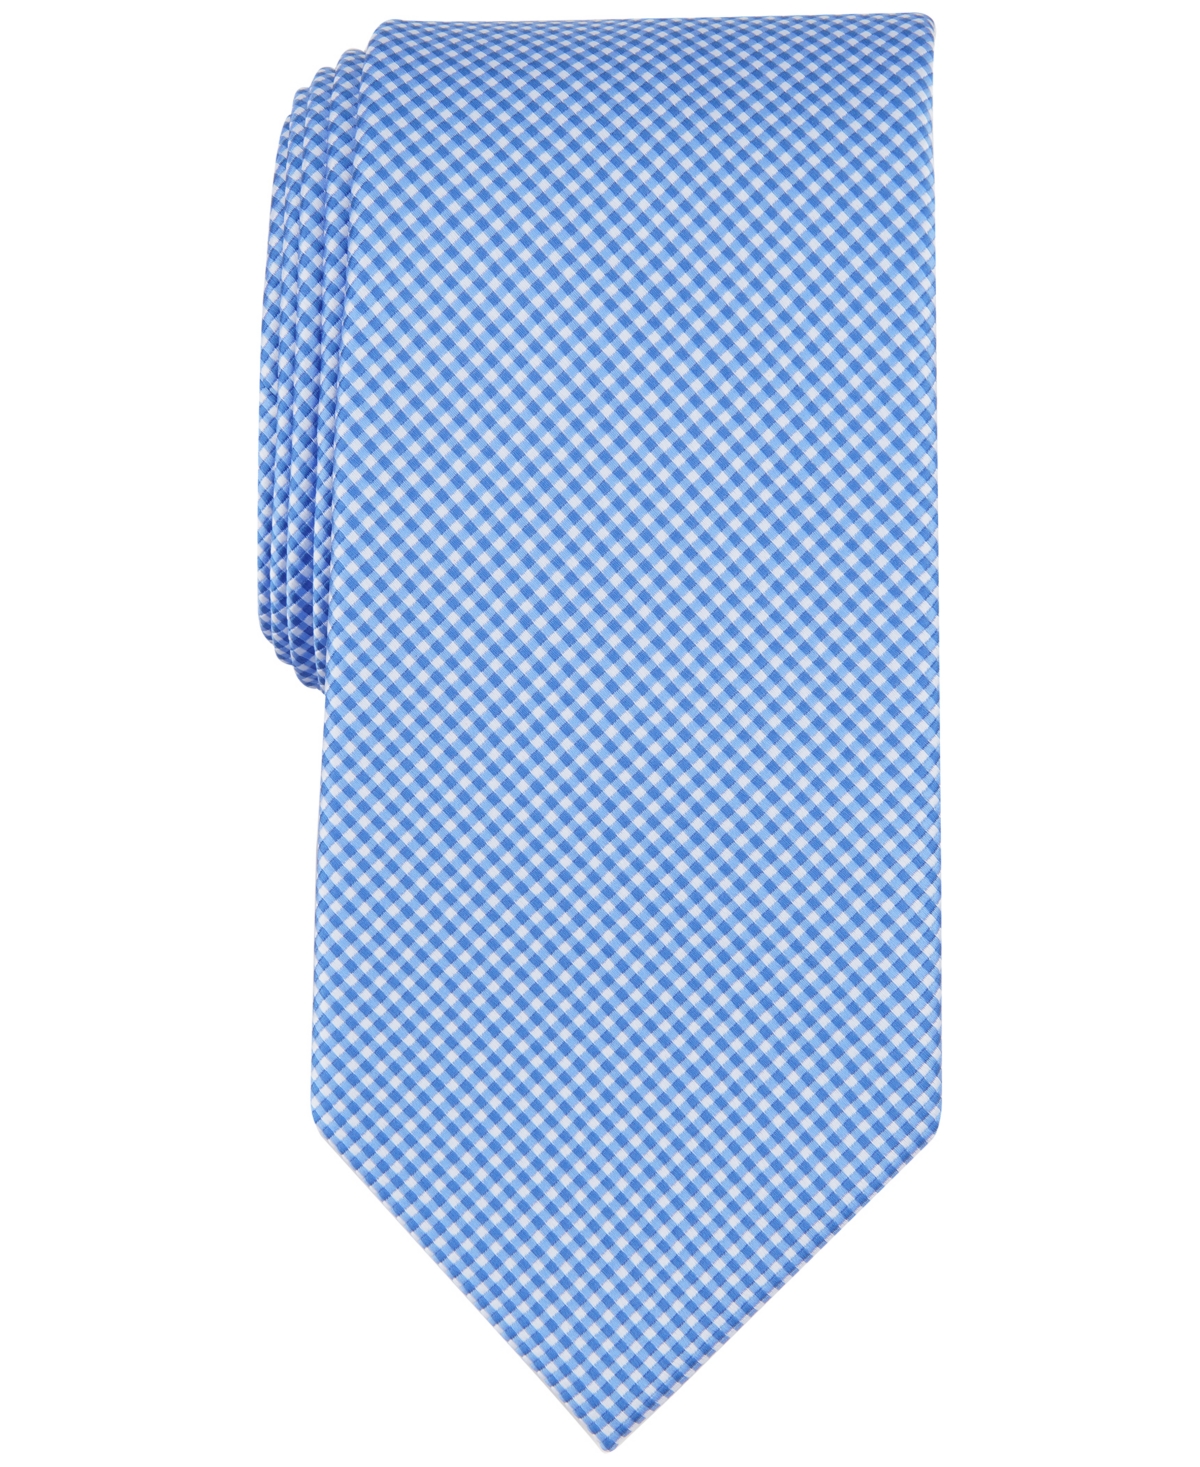 Men's Micro-Grid Tie, Created for Macy's - Lt.blue